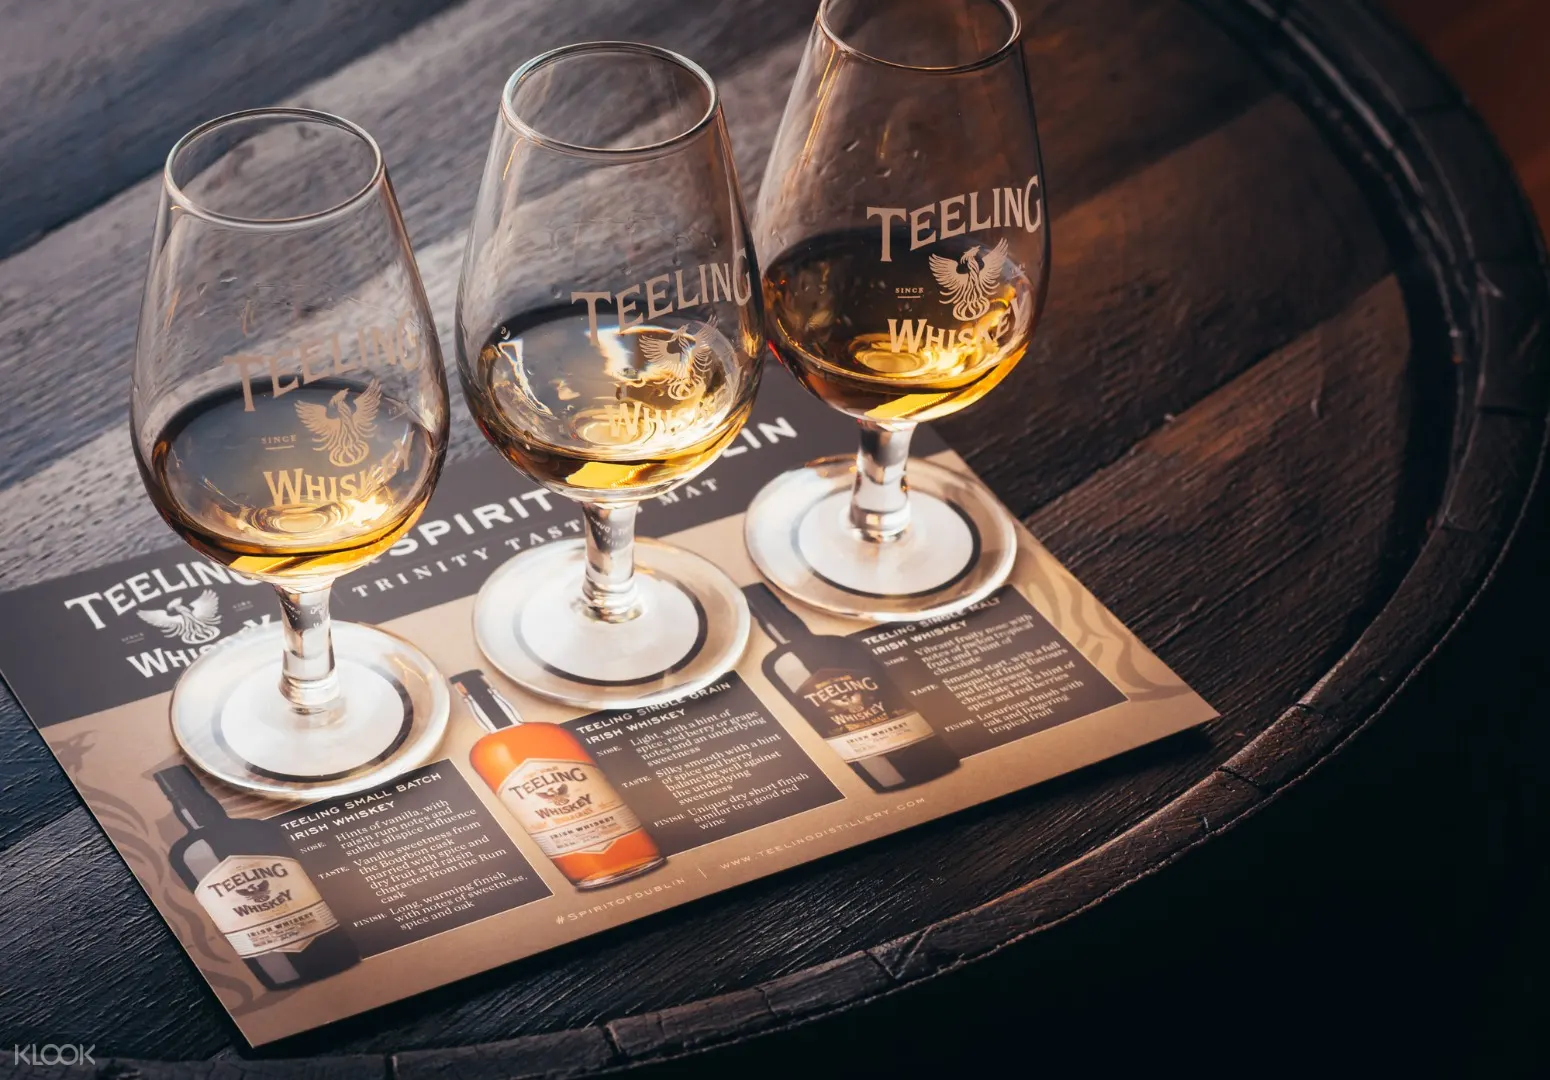 Teeling whiskey distillery